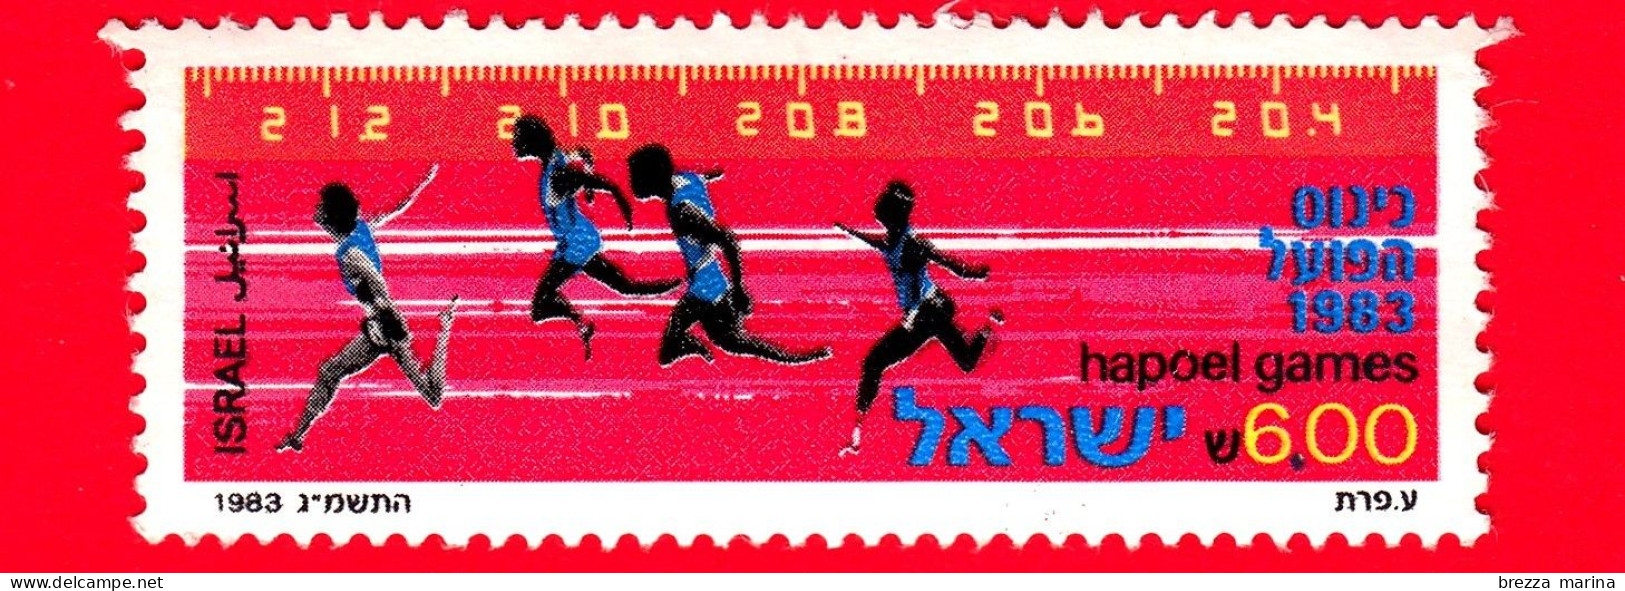 ISRAELE - Usato - 1983 - Sport - 12 Giochi Hapoel - Atletica - Corsa - Running - 6.00 - Usados (sin Tab)